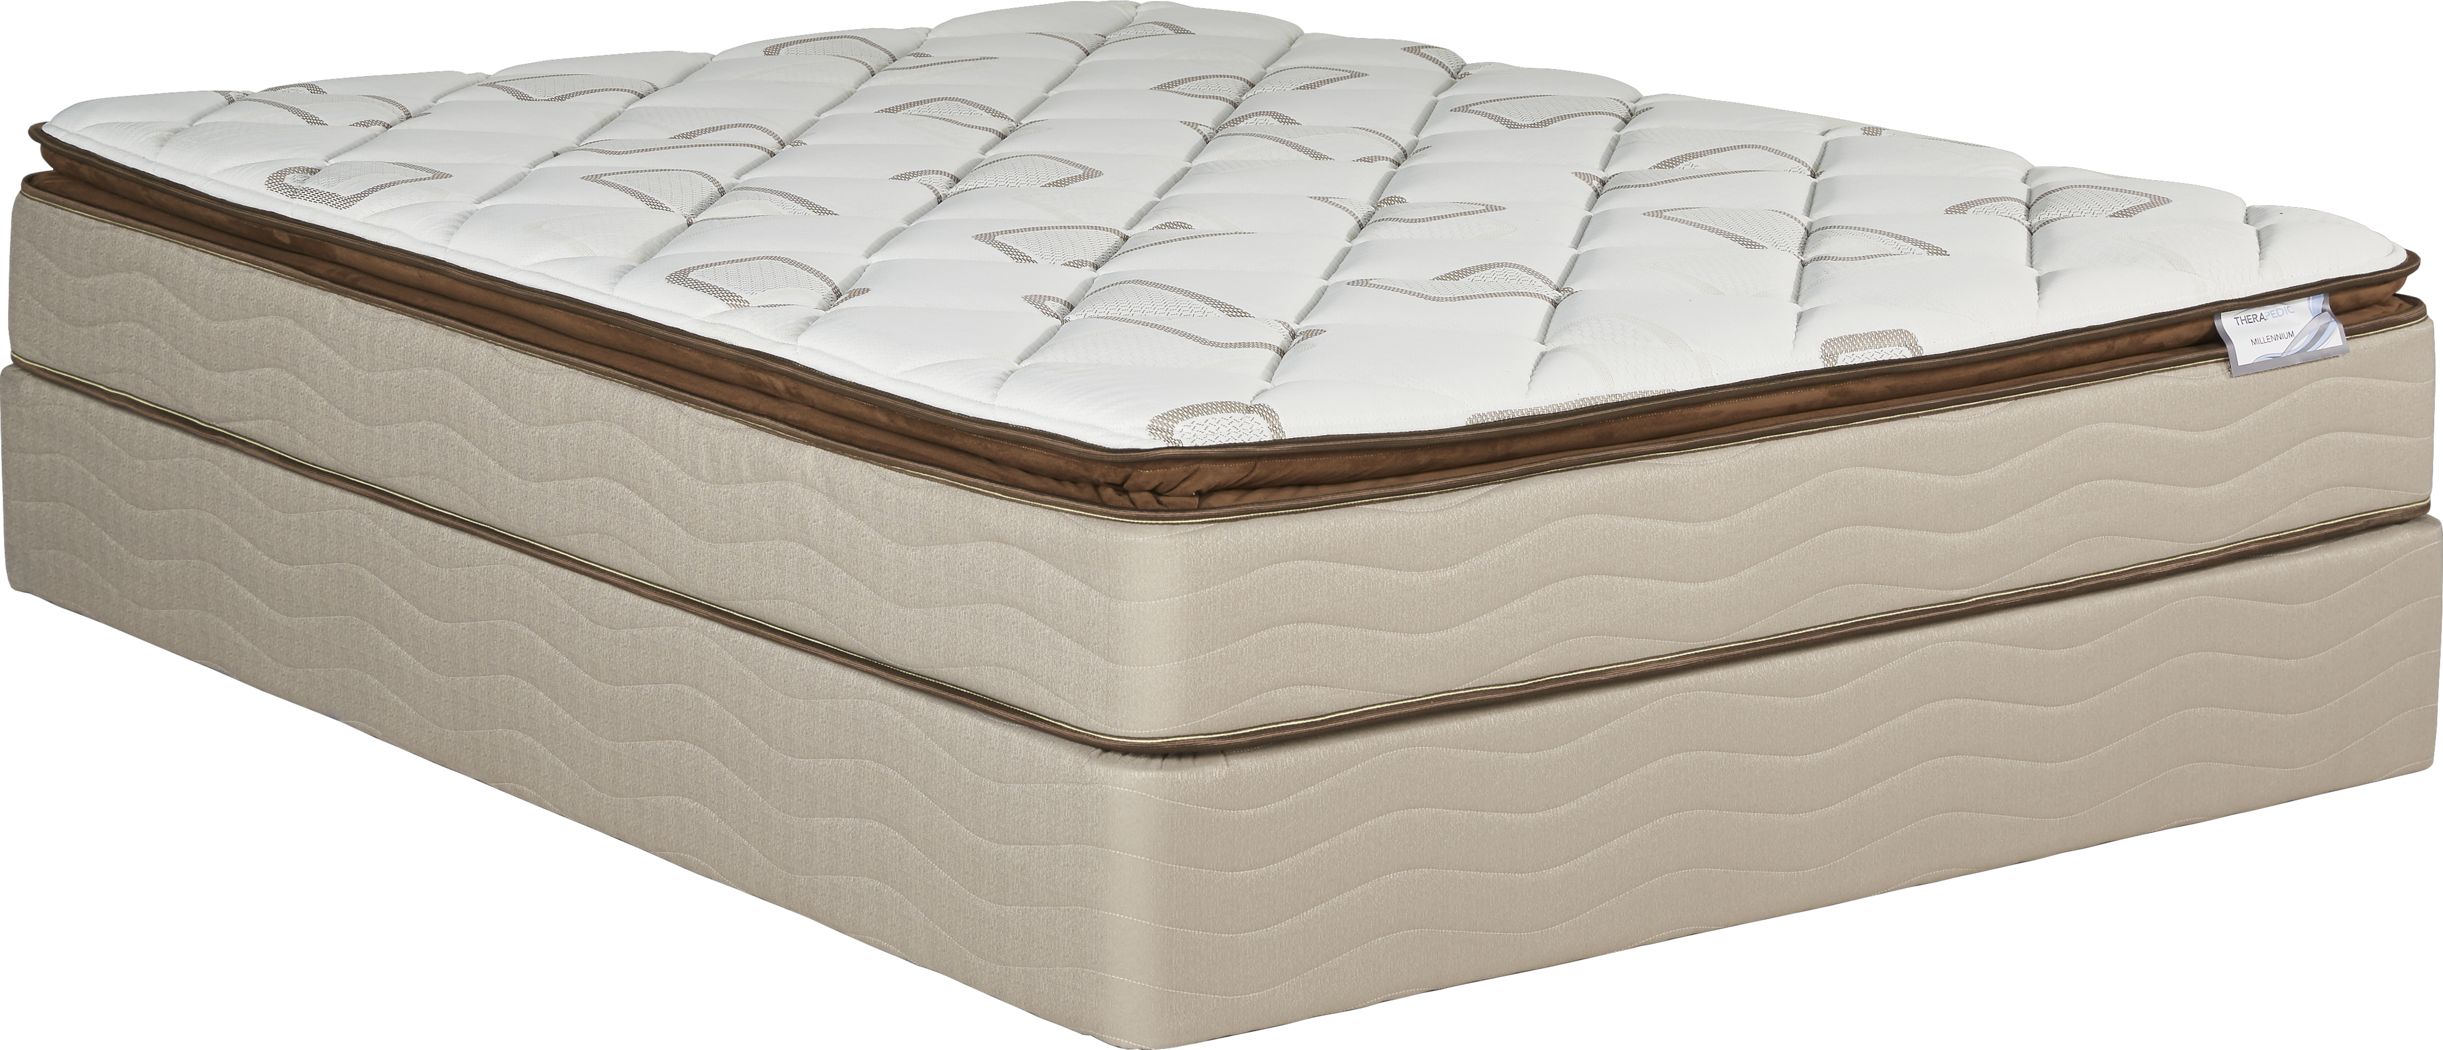 therapedic queen mattress set